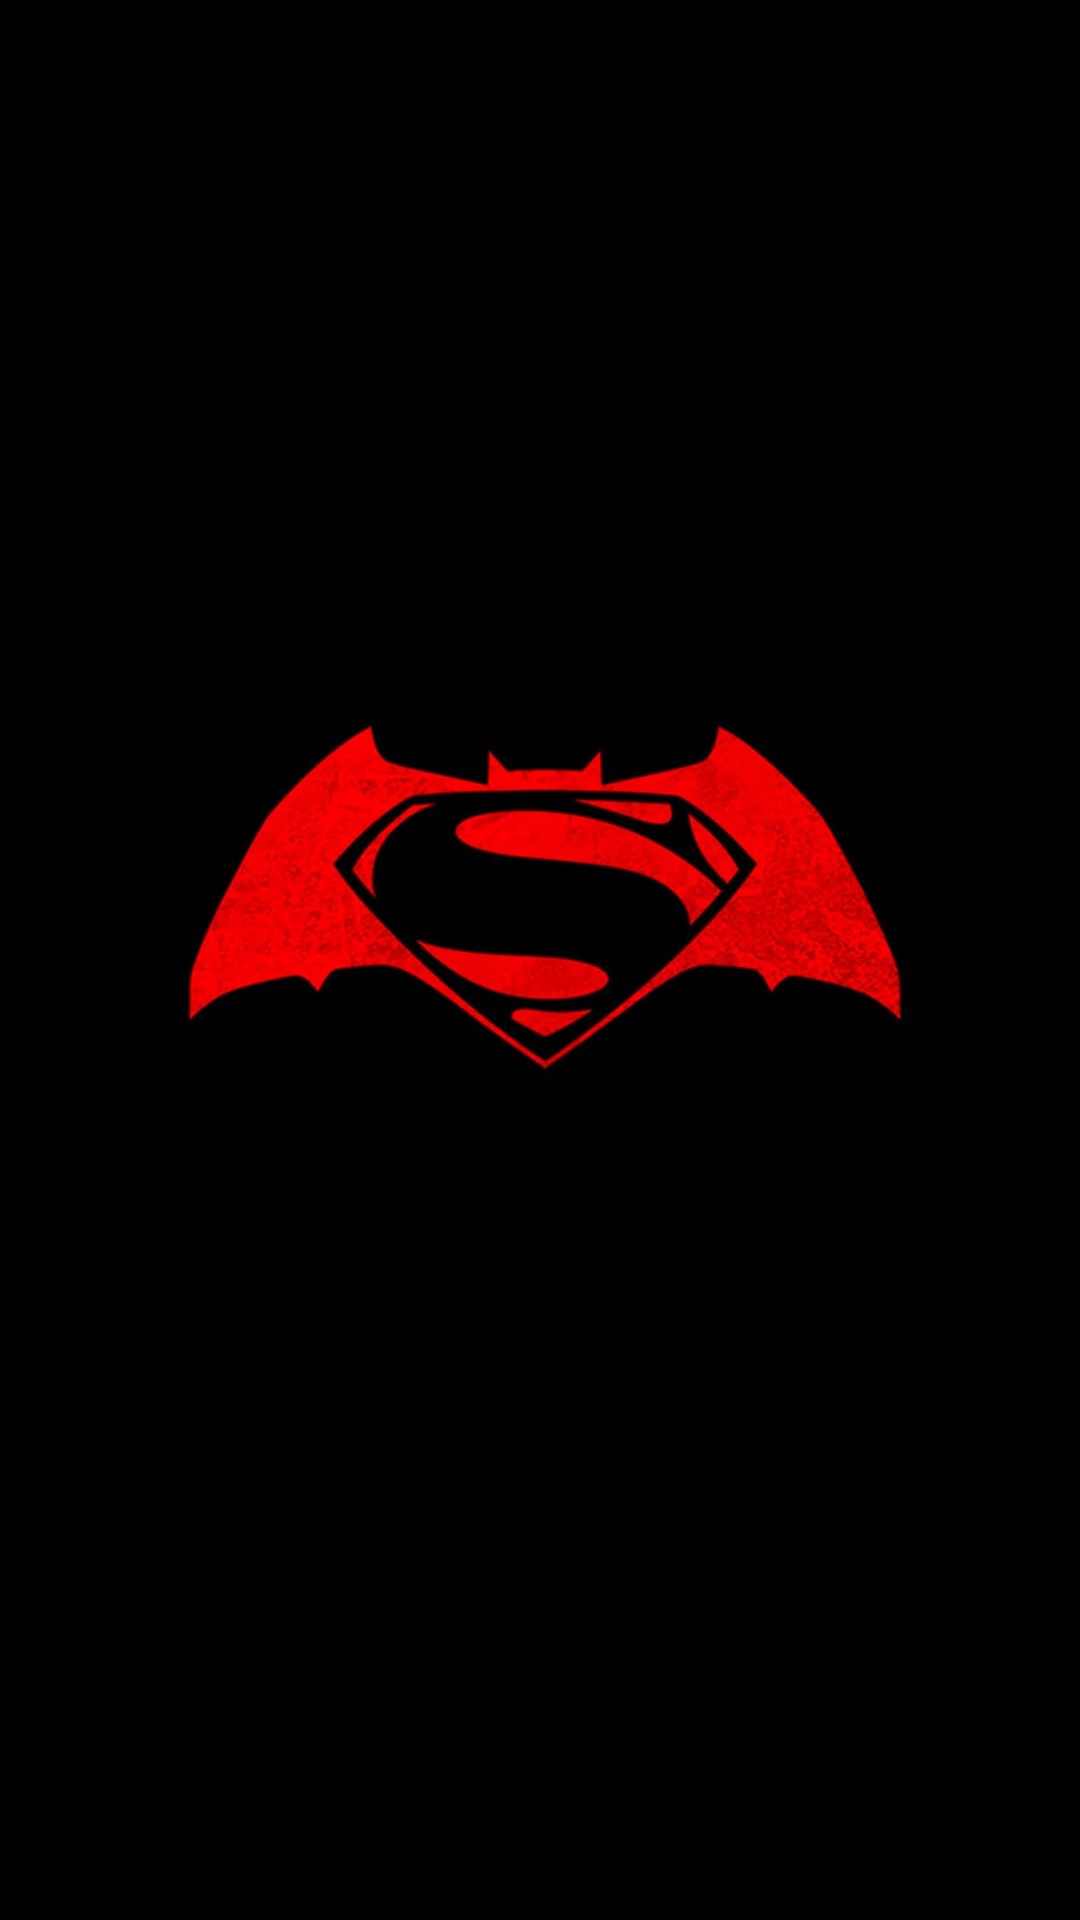 Batman v Superman logo Wallpaper for Motorola Moto X